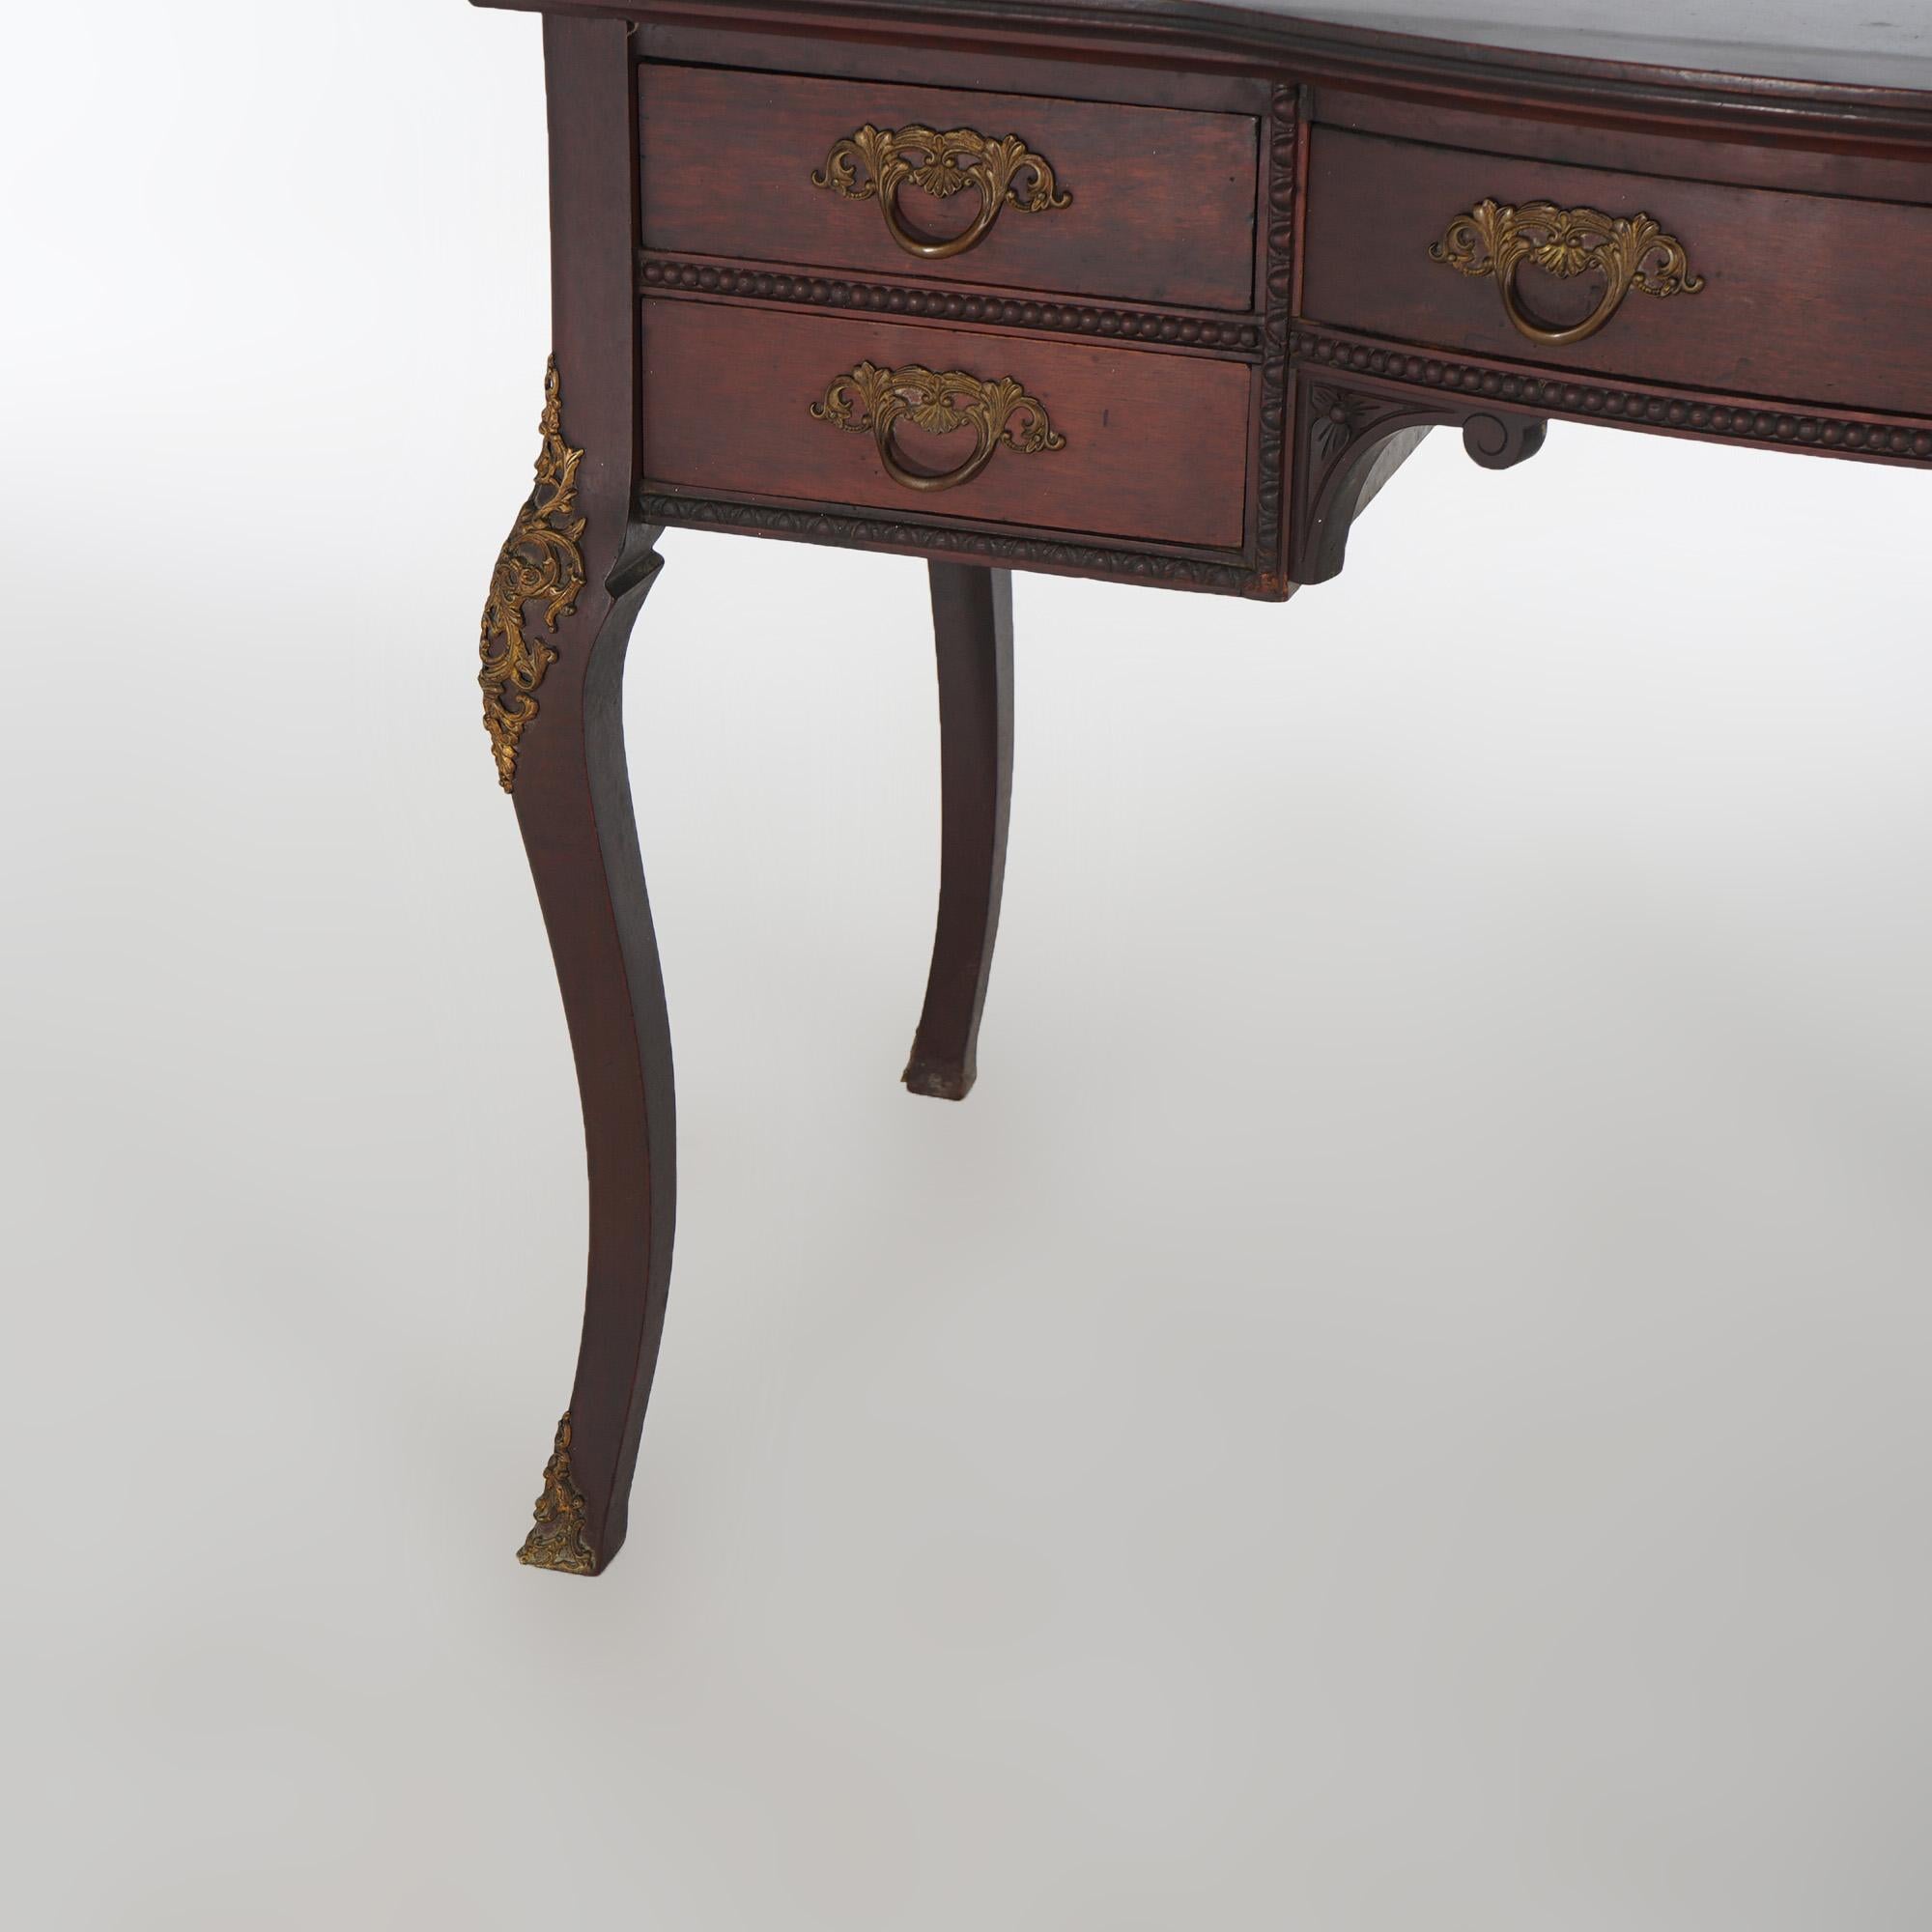 Antique French Mahogany & Ormolu Bureau Plat Writing Desk C1910 9